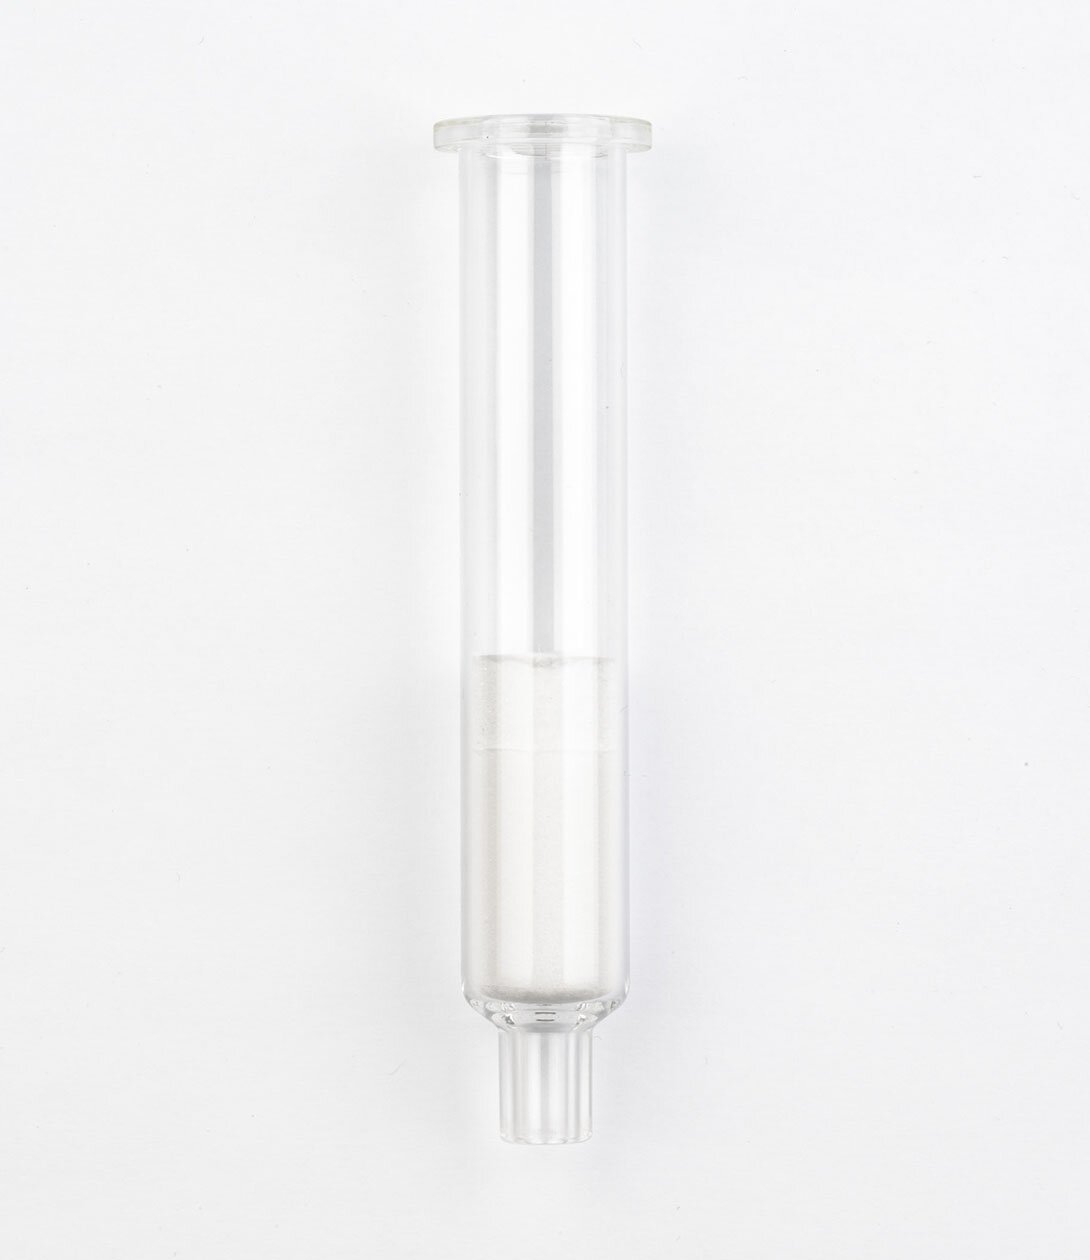 Elufix glass column 2 g Florisil & 2 g anhydrous sodium sulphate | © LCTech GmbH